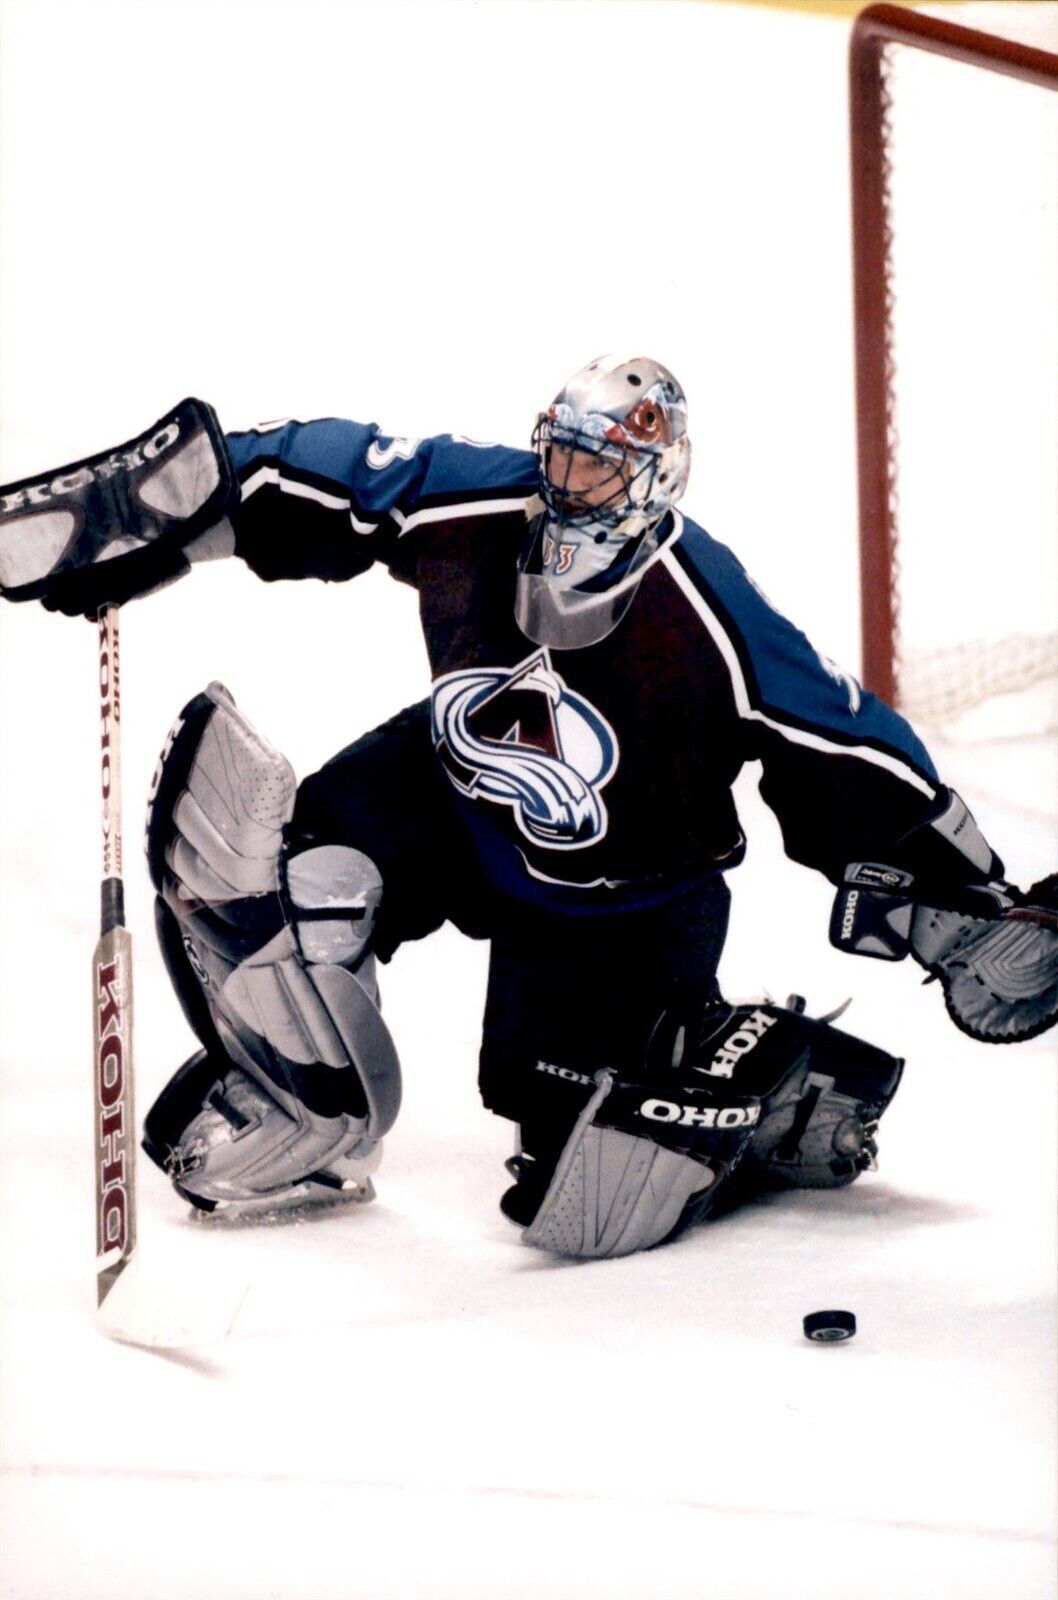 PF43 Original Photo PATRICK ROY 2001 COLORADO AVALANCHE NHL ICE HOCKEY GOALIE